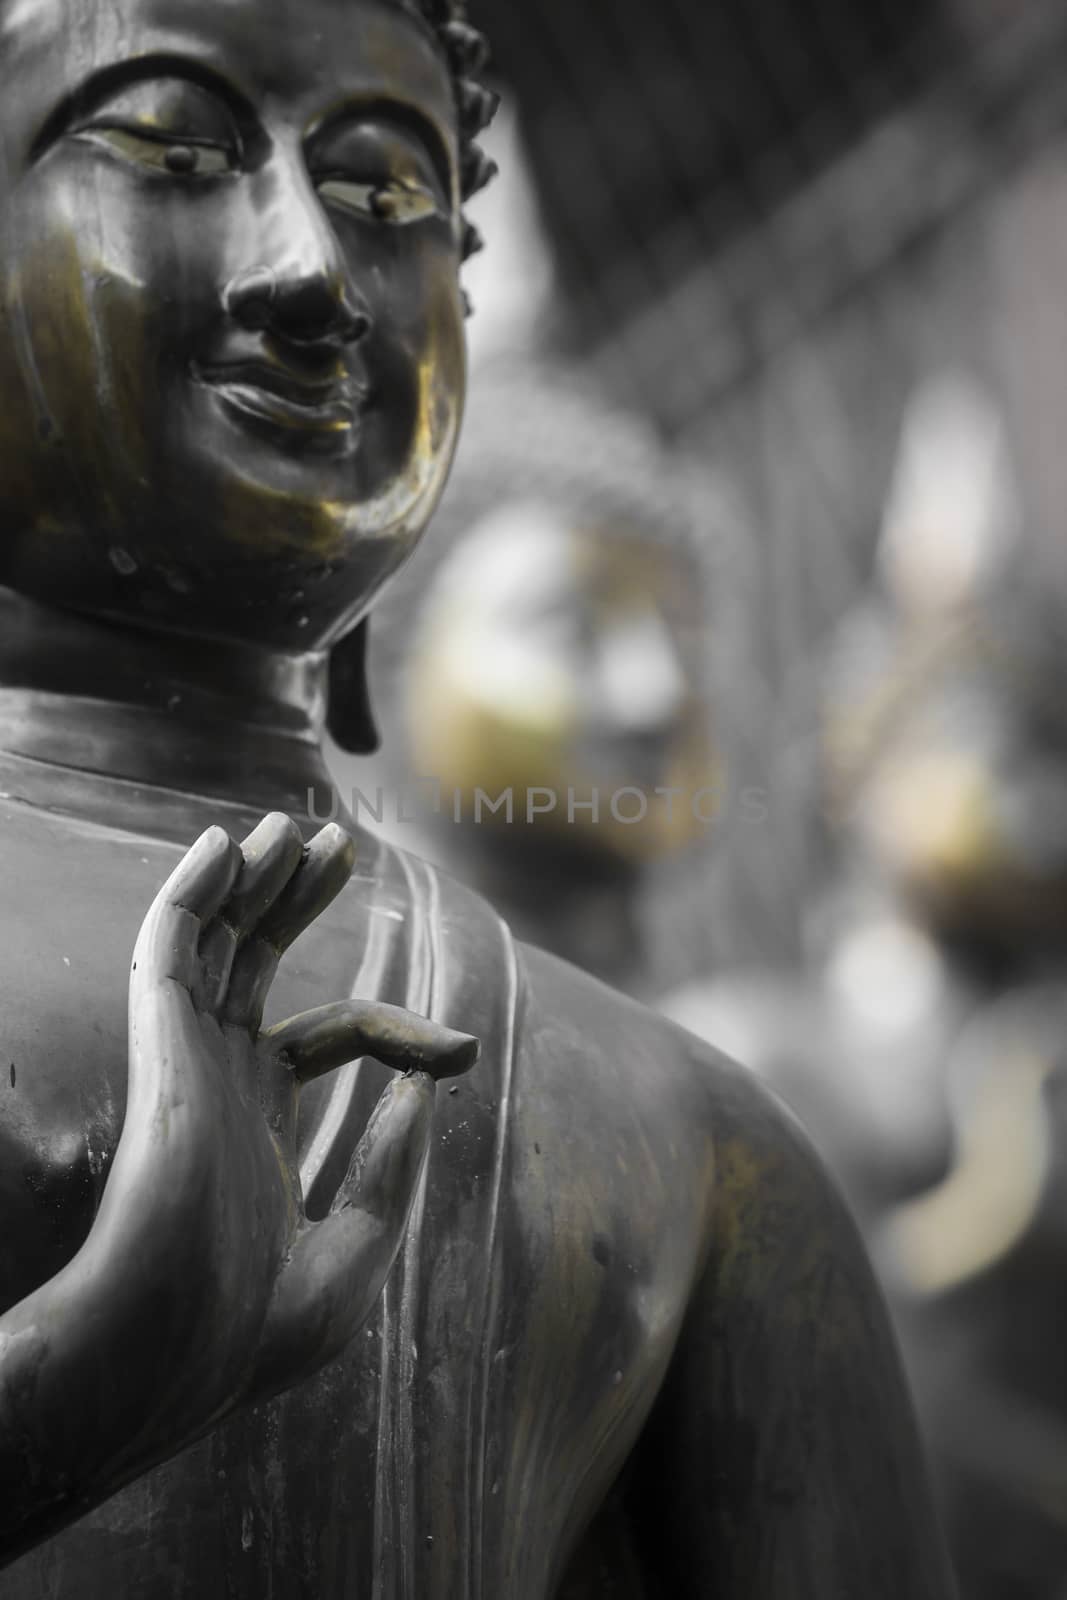 Row of Buddha statues at Ganagarama temple, Colombo, Sri Lanka. Black and white.Yellow selective colour.

